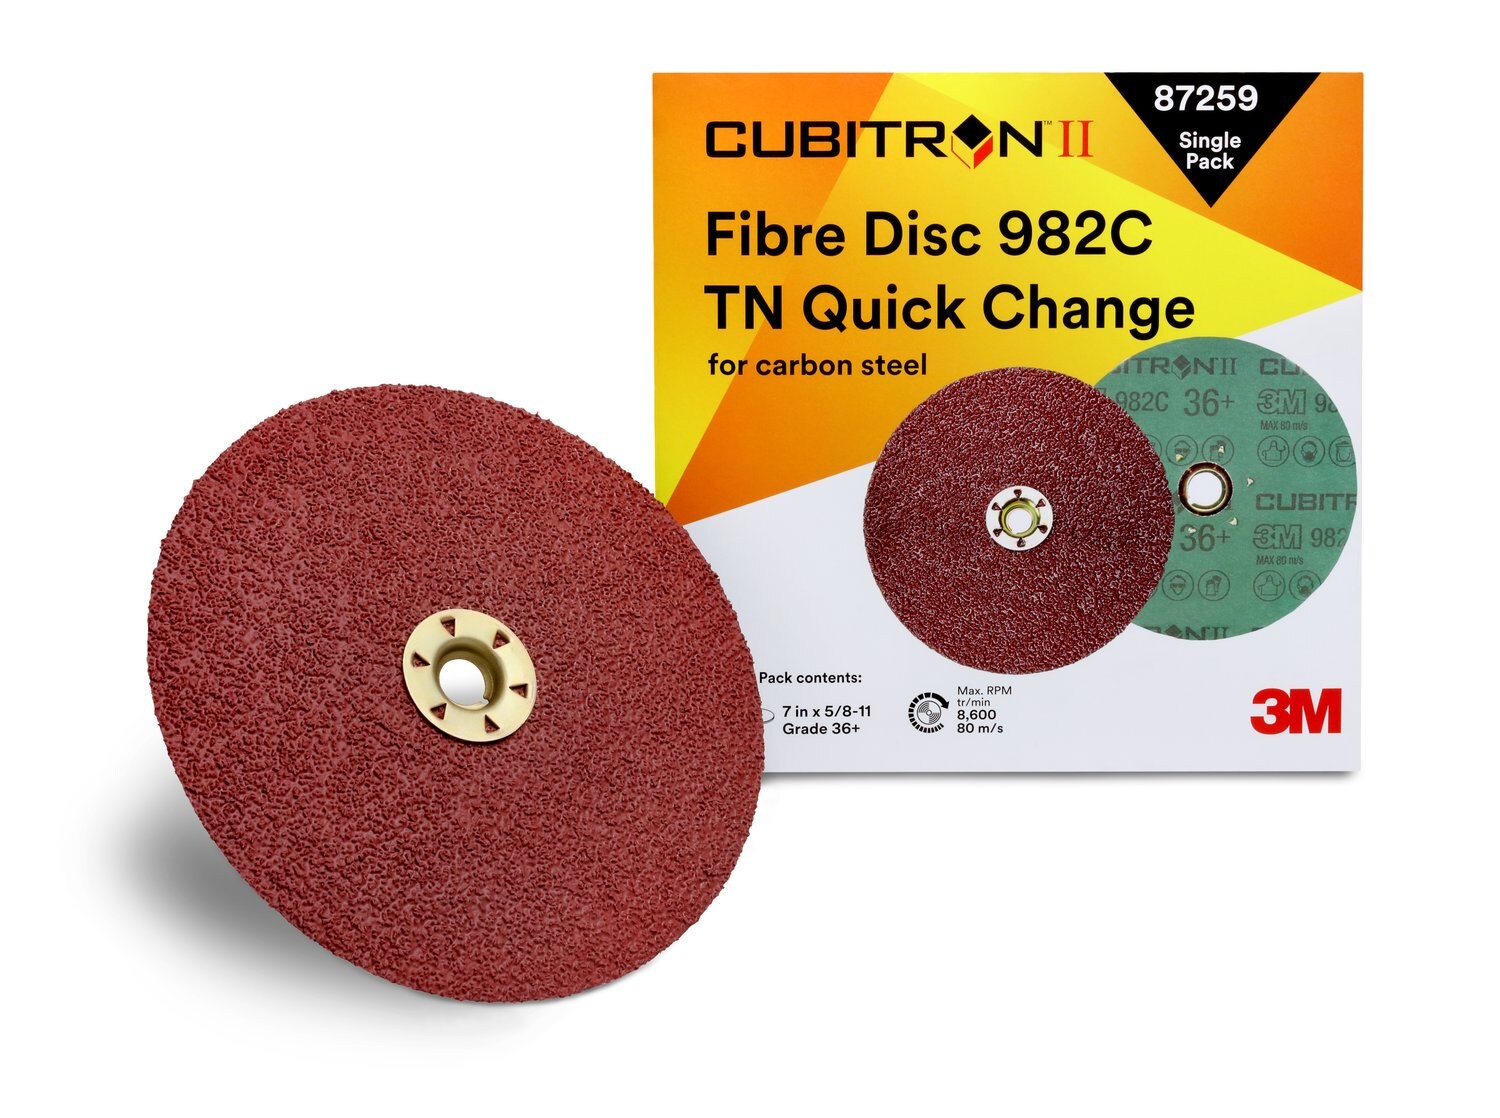 7010363648 - 3M Cubitron II Fibre Disc 982C, 36+, TN Quick Change, 7 in, Die
TN700BB, Trial Pack, 10 ea/Case